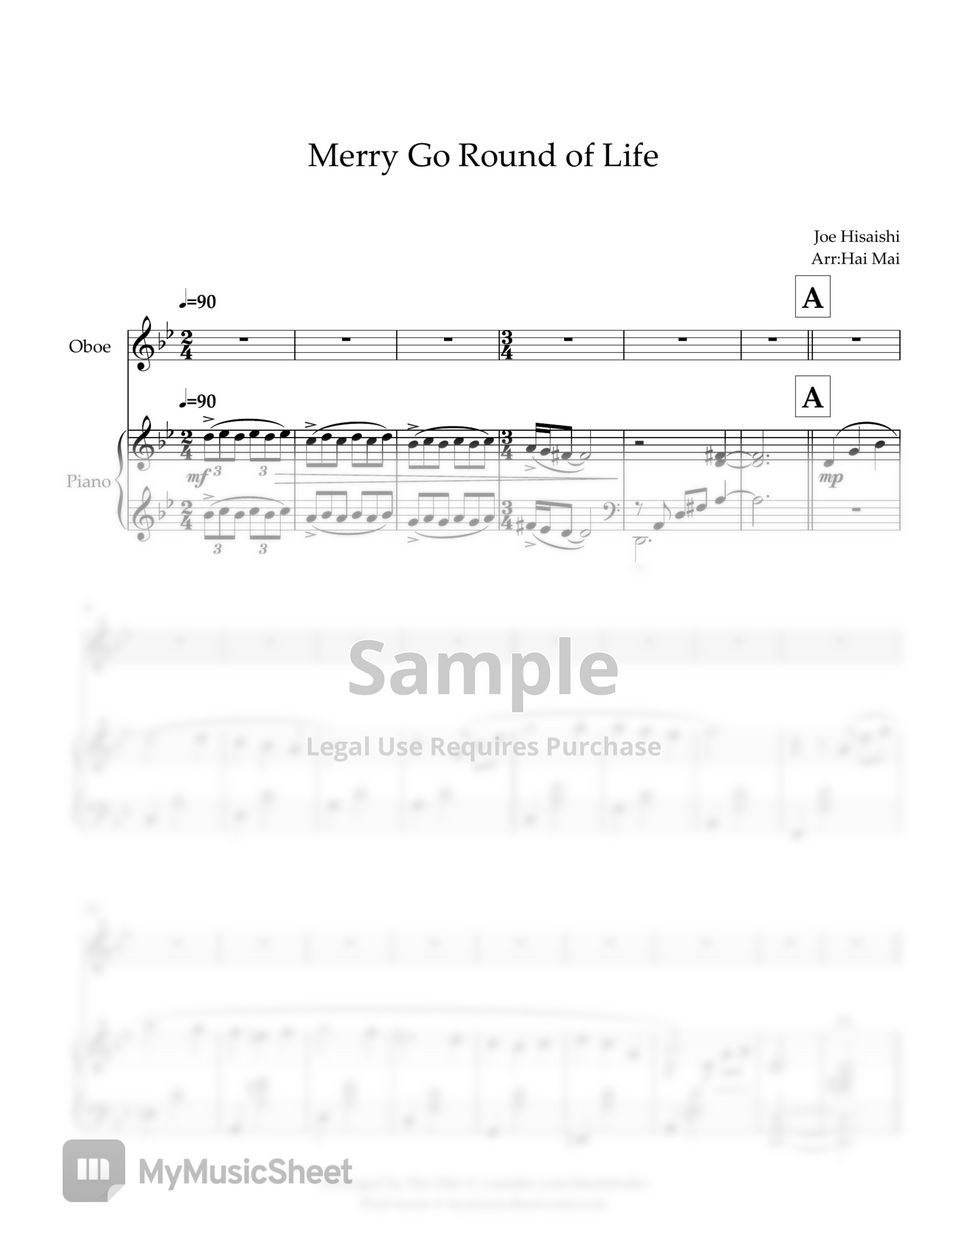 Joe Hisaishi - Merry Go Round of Life for Oboe solo (easy) and Piano Accompaniment by Hai Mai